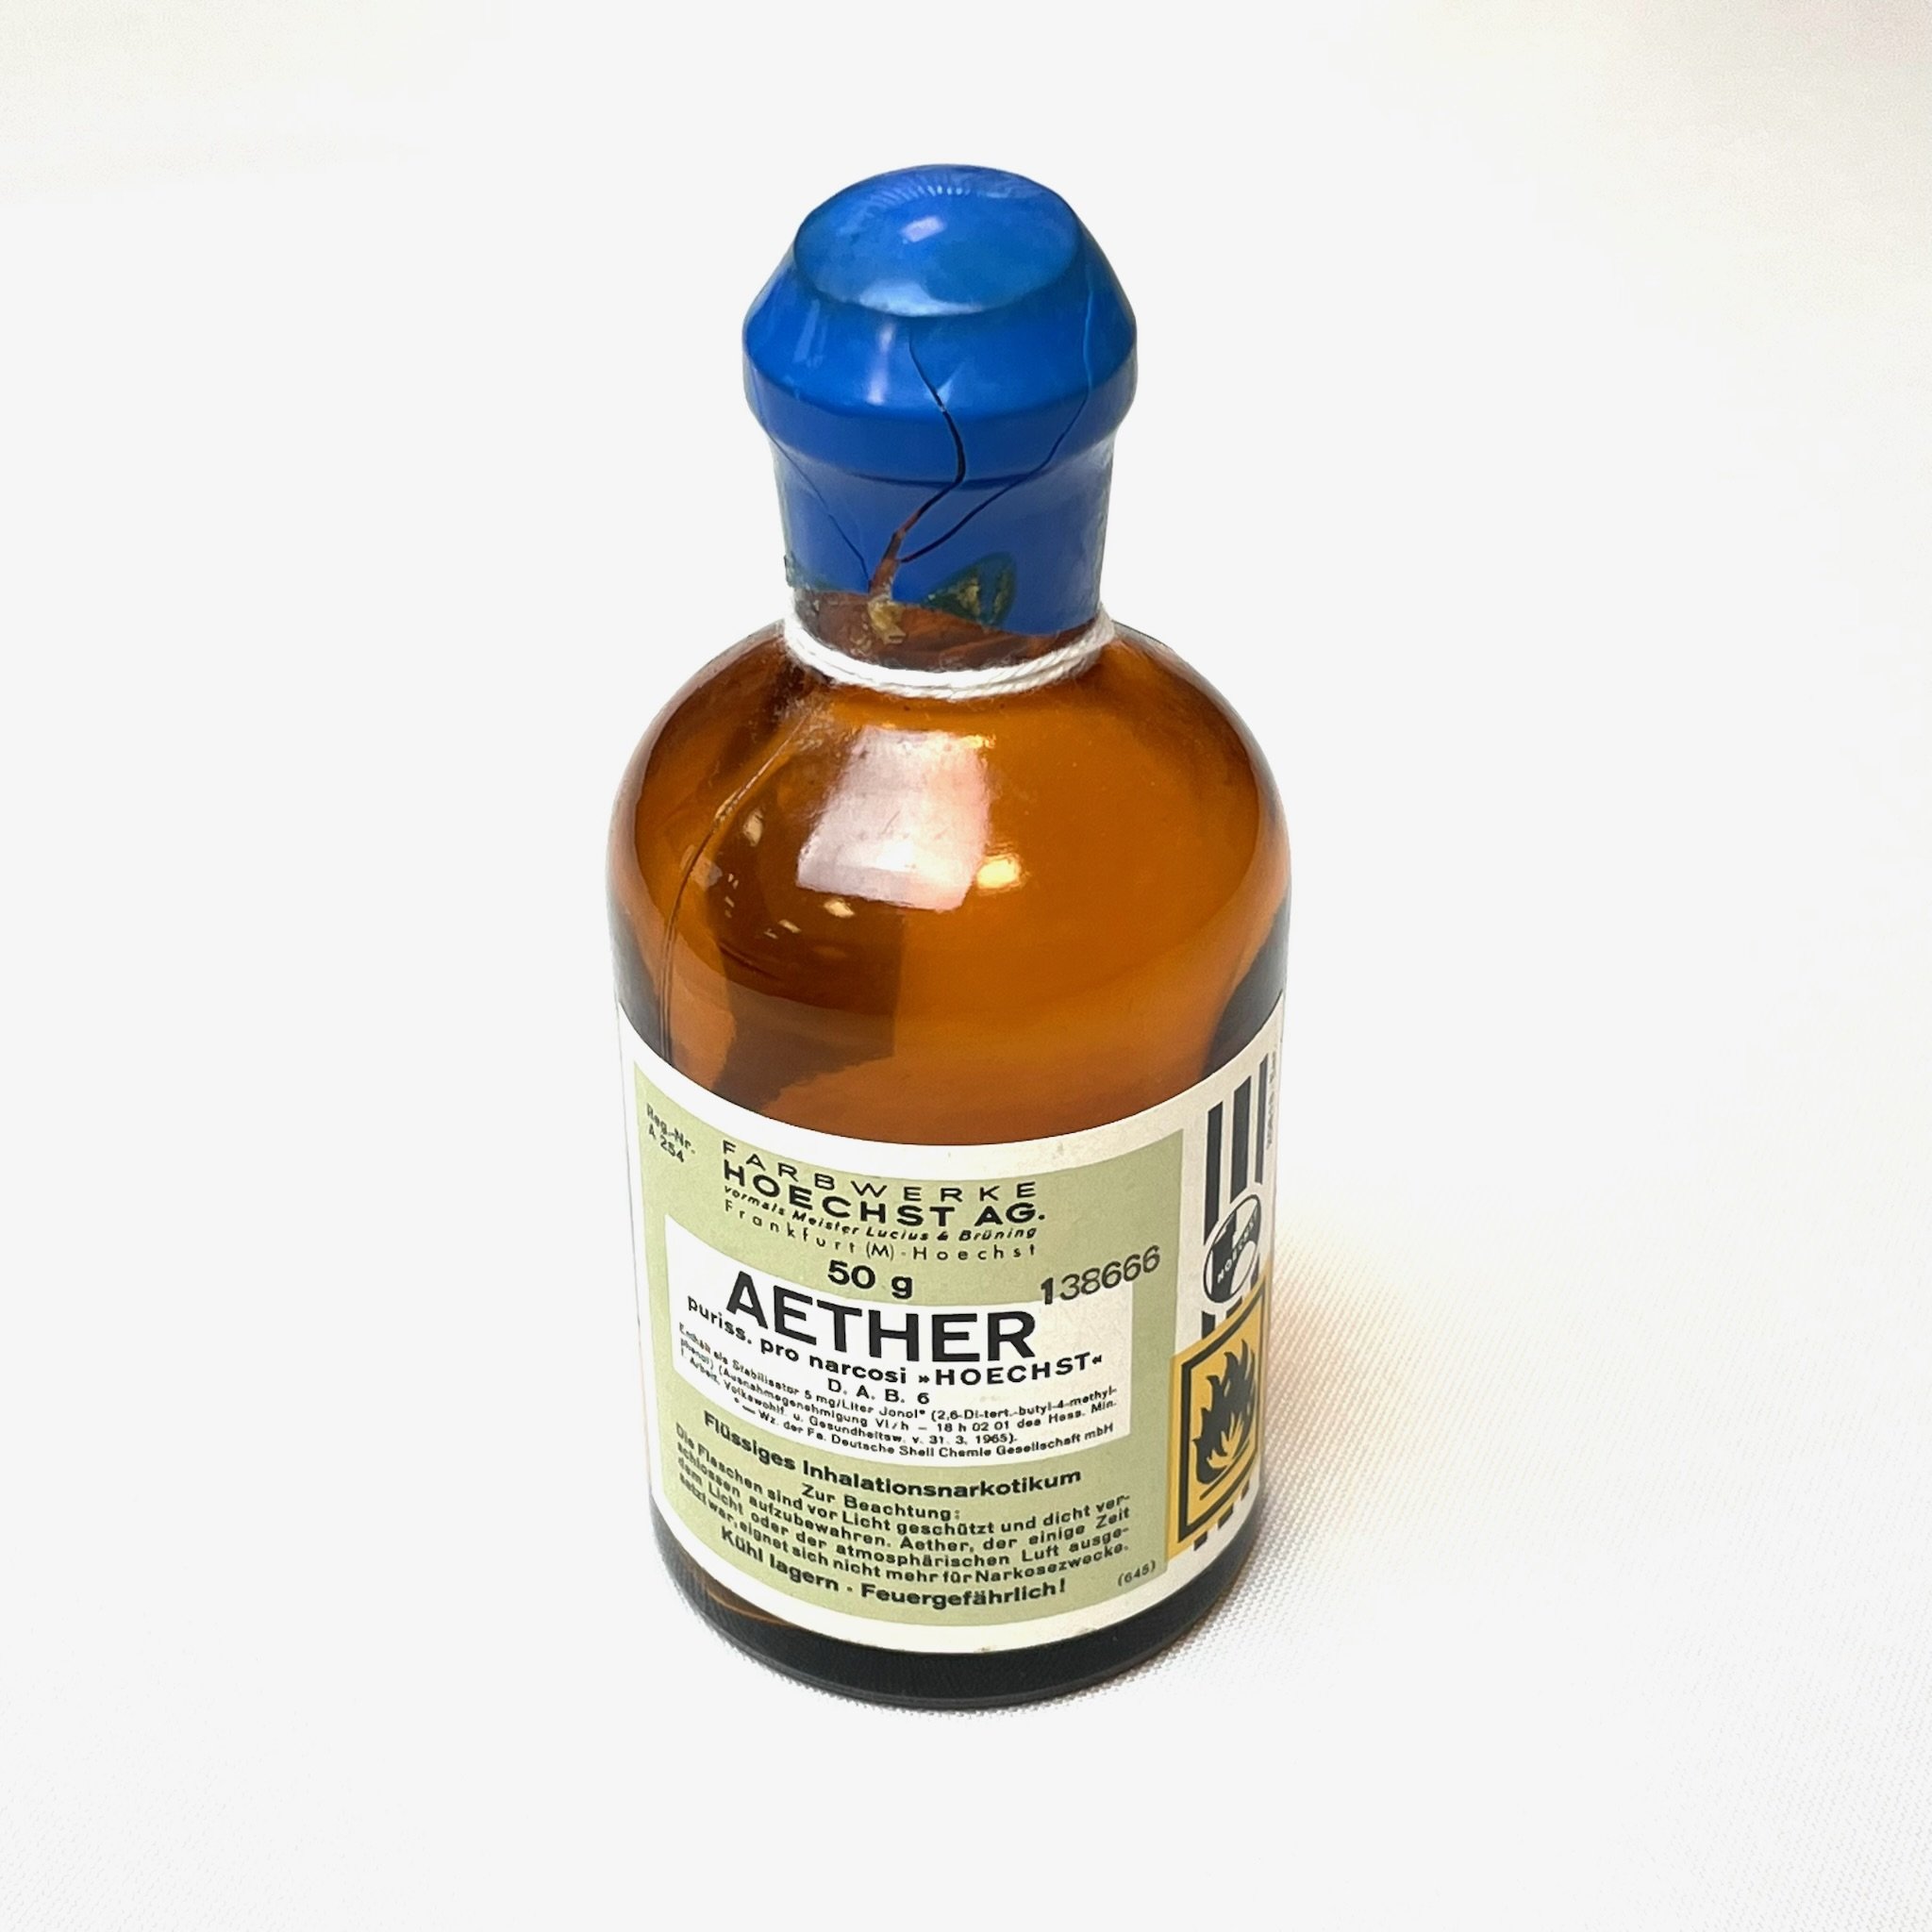 Aether puriss. pro narcosi "Hoechst" (Krankenhausmuseum Bielefeld e.V. CC BY-NC-SA)